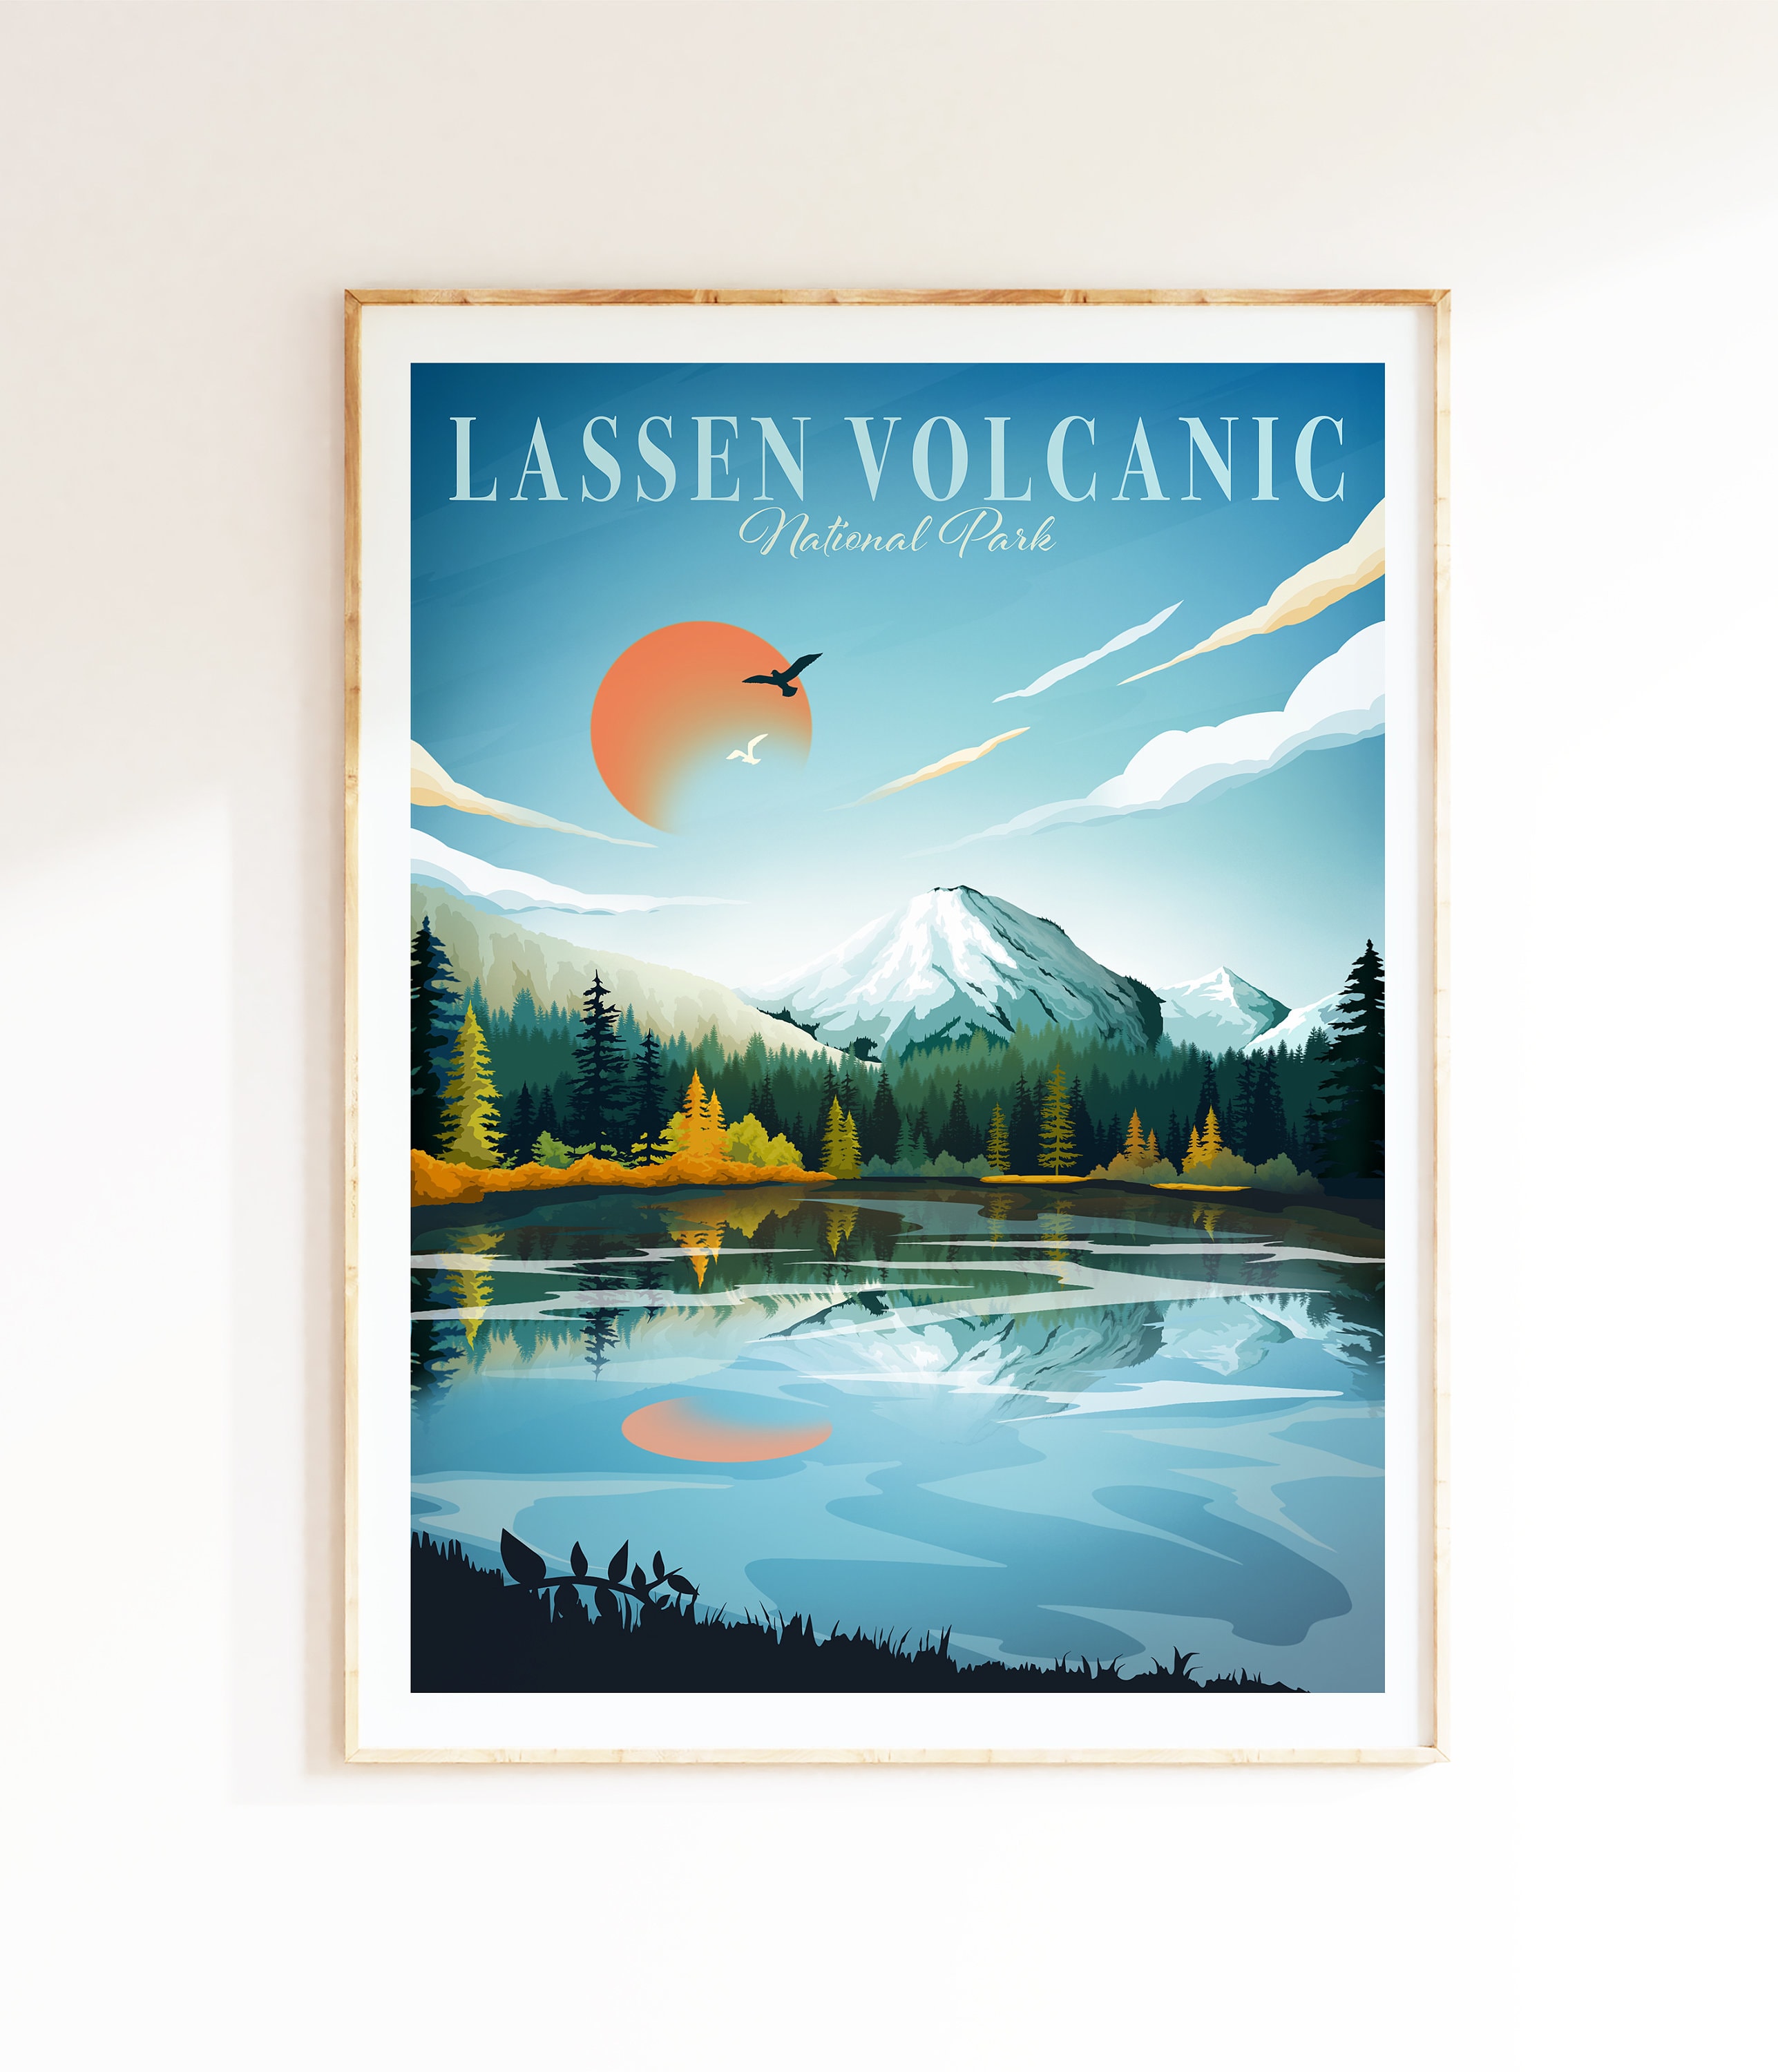 Lassen Volcanic National Park in California - Tours and Activities